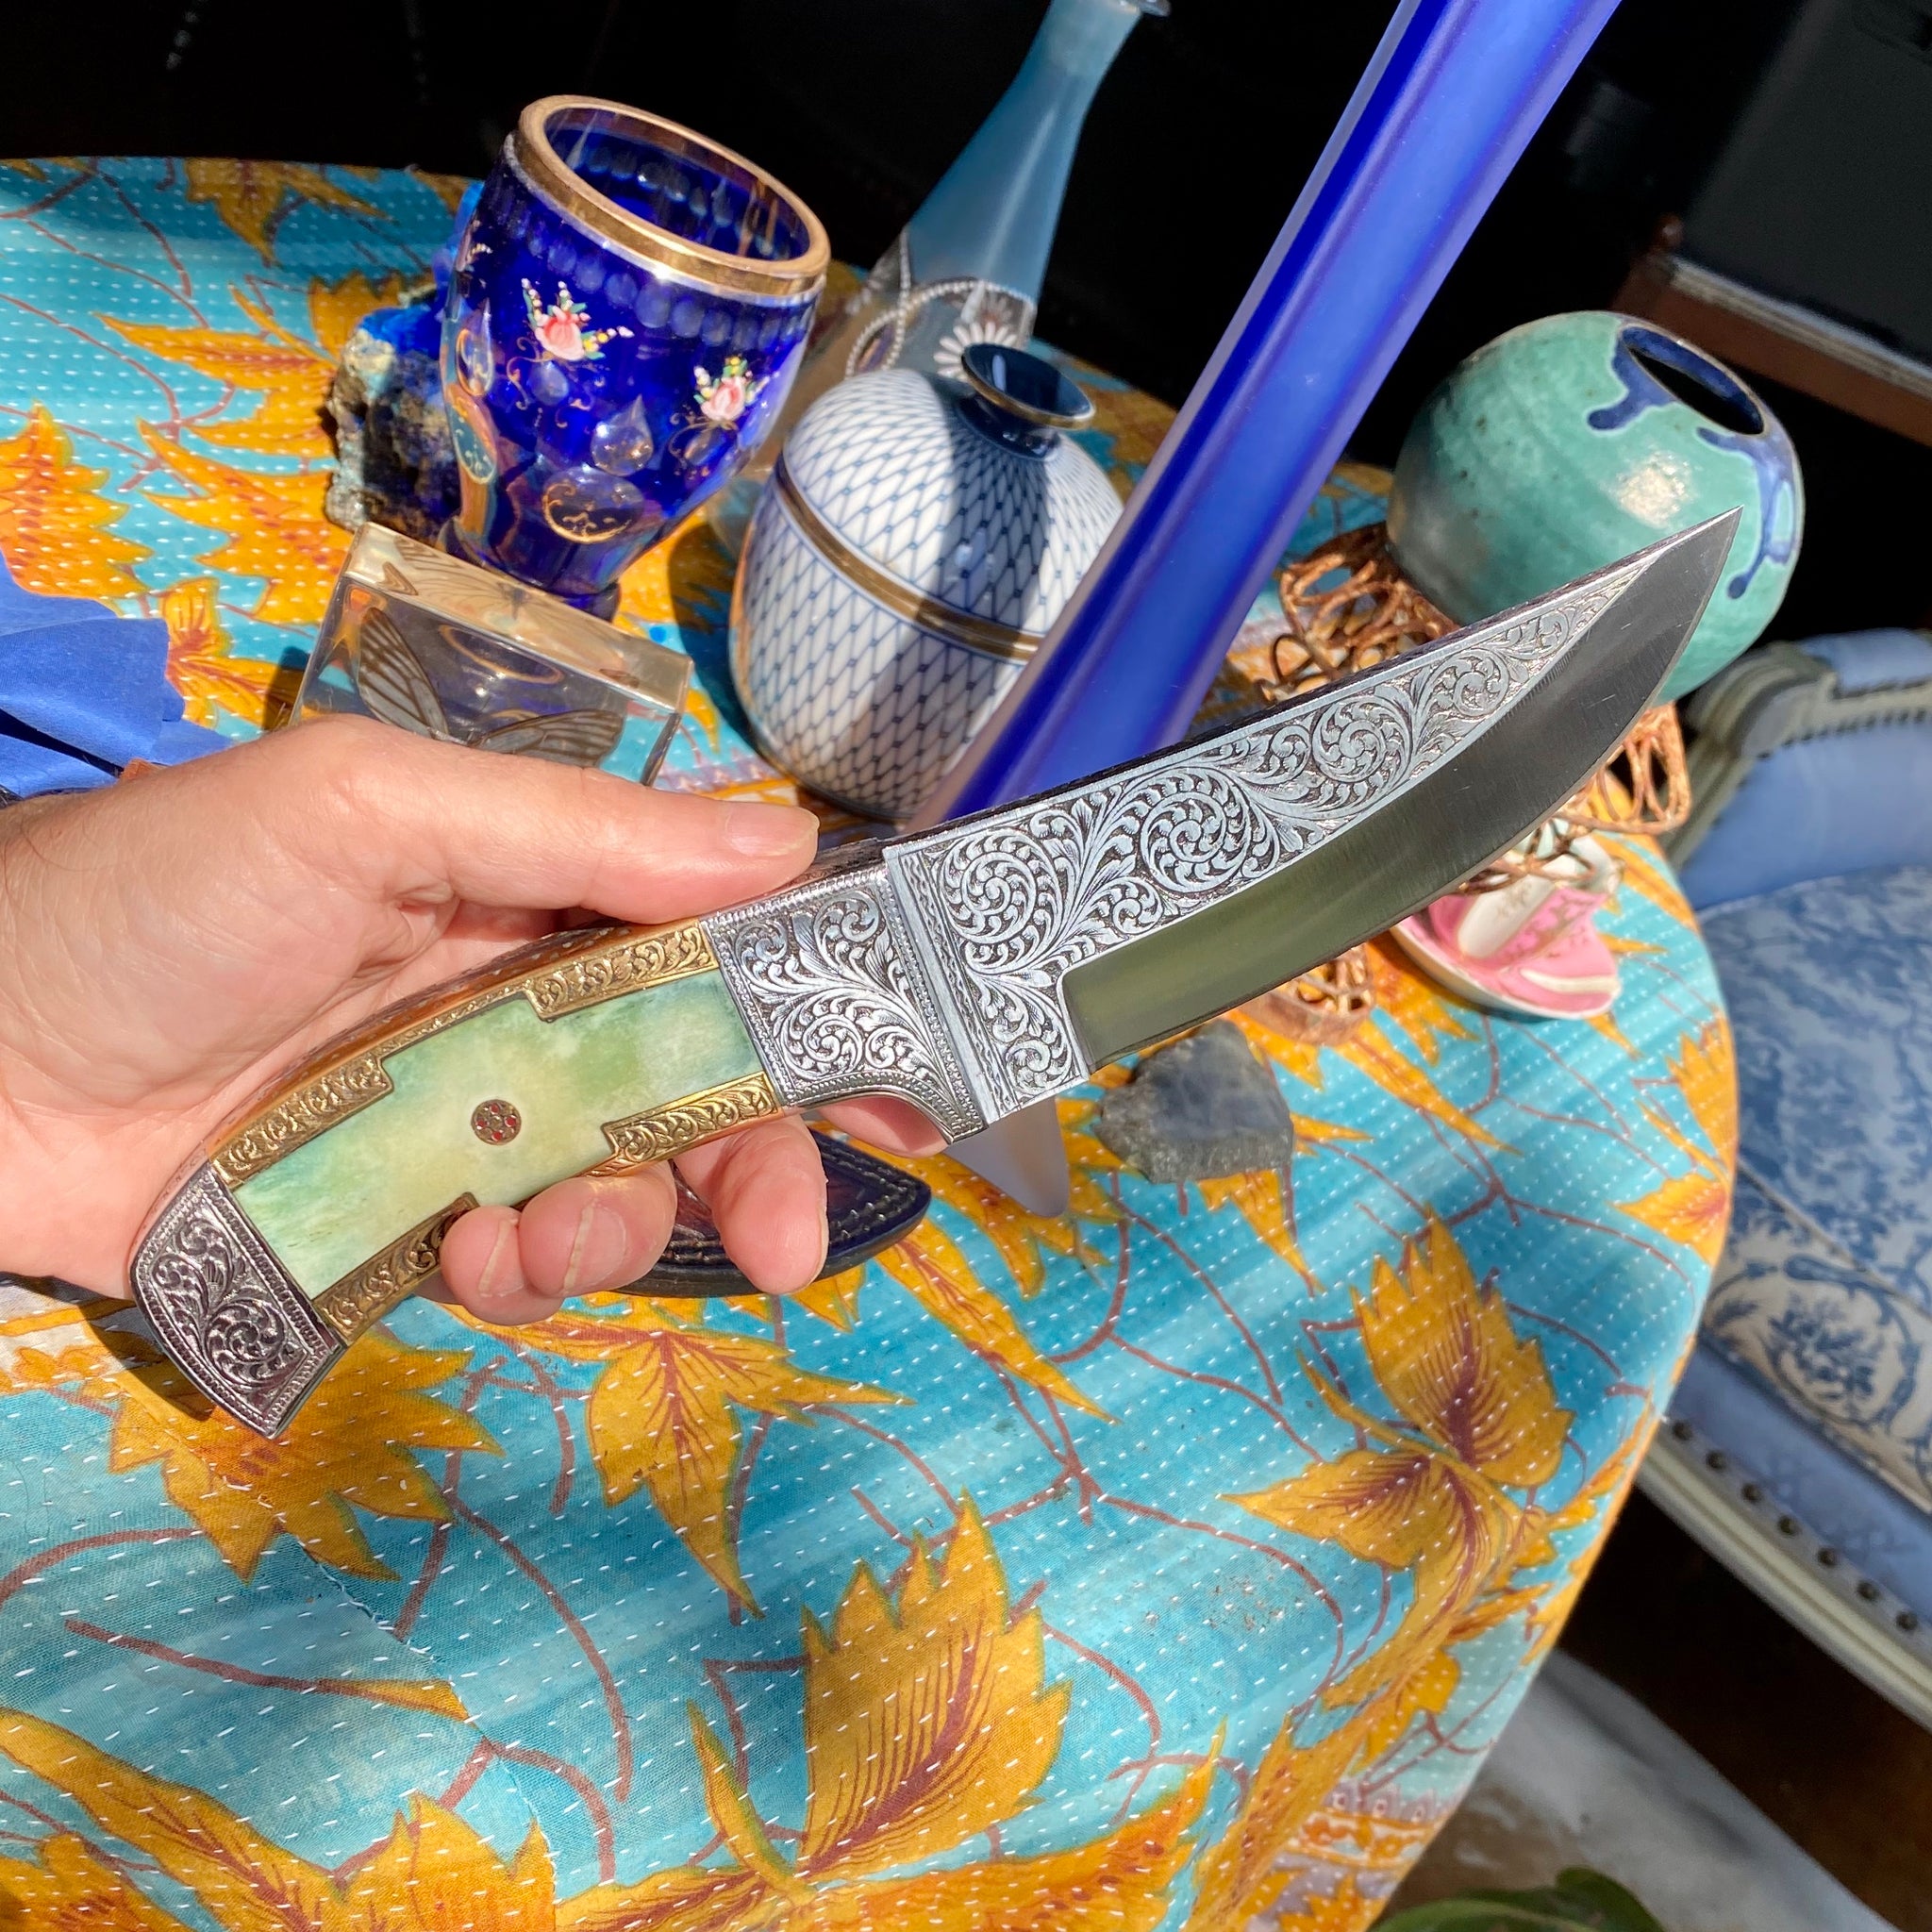 Custom made Damascus steel Hunting Knife with leather sheath